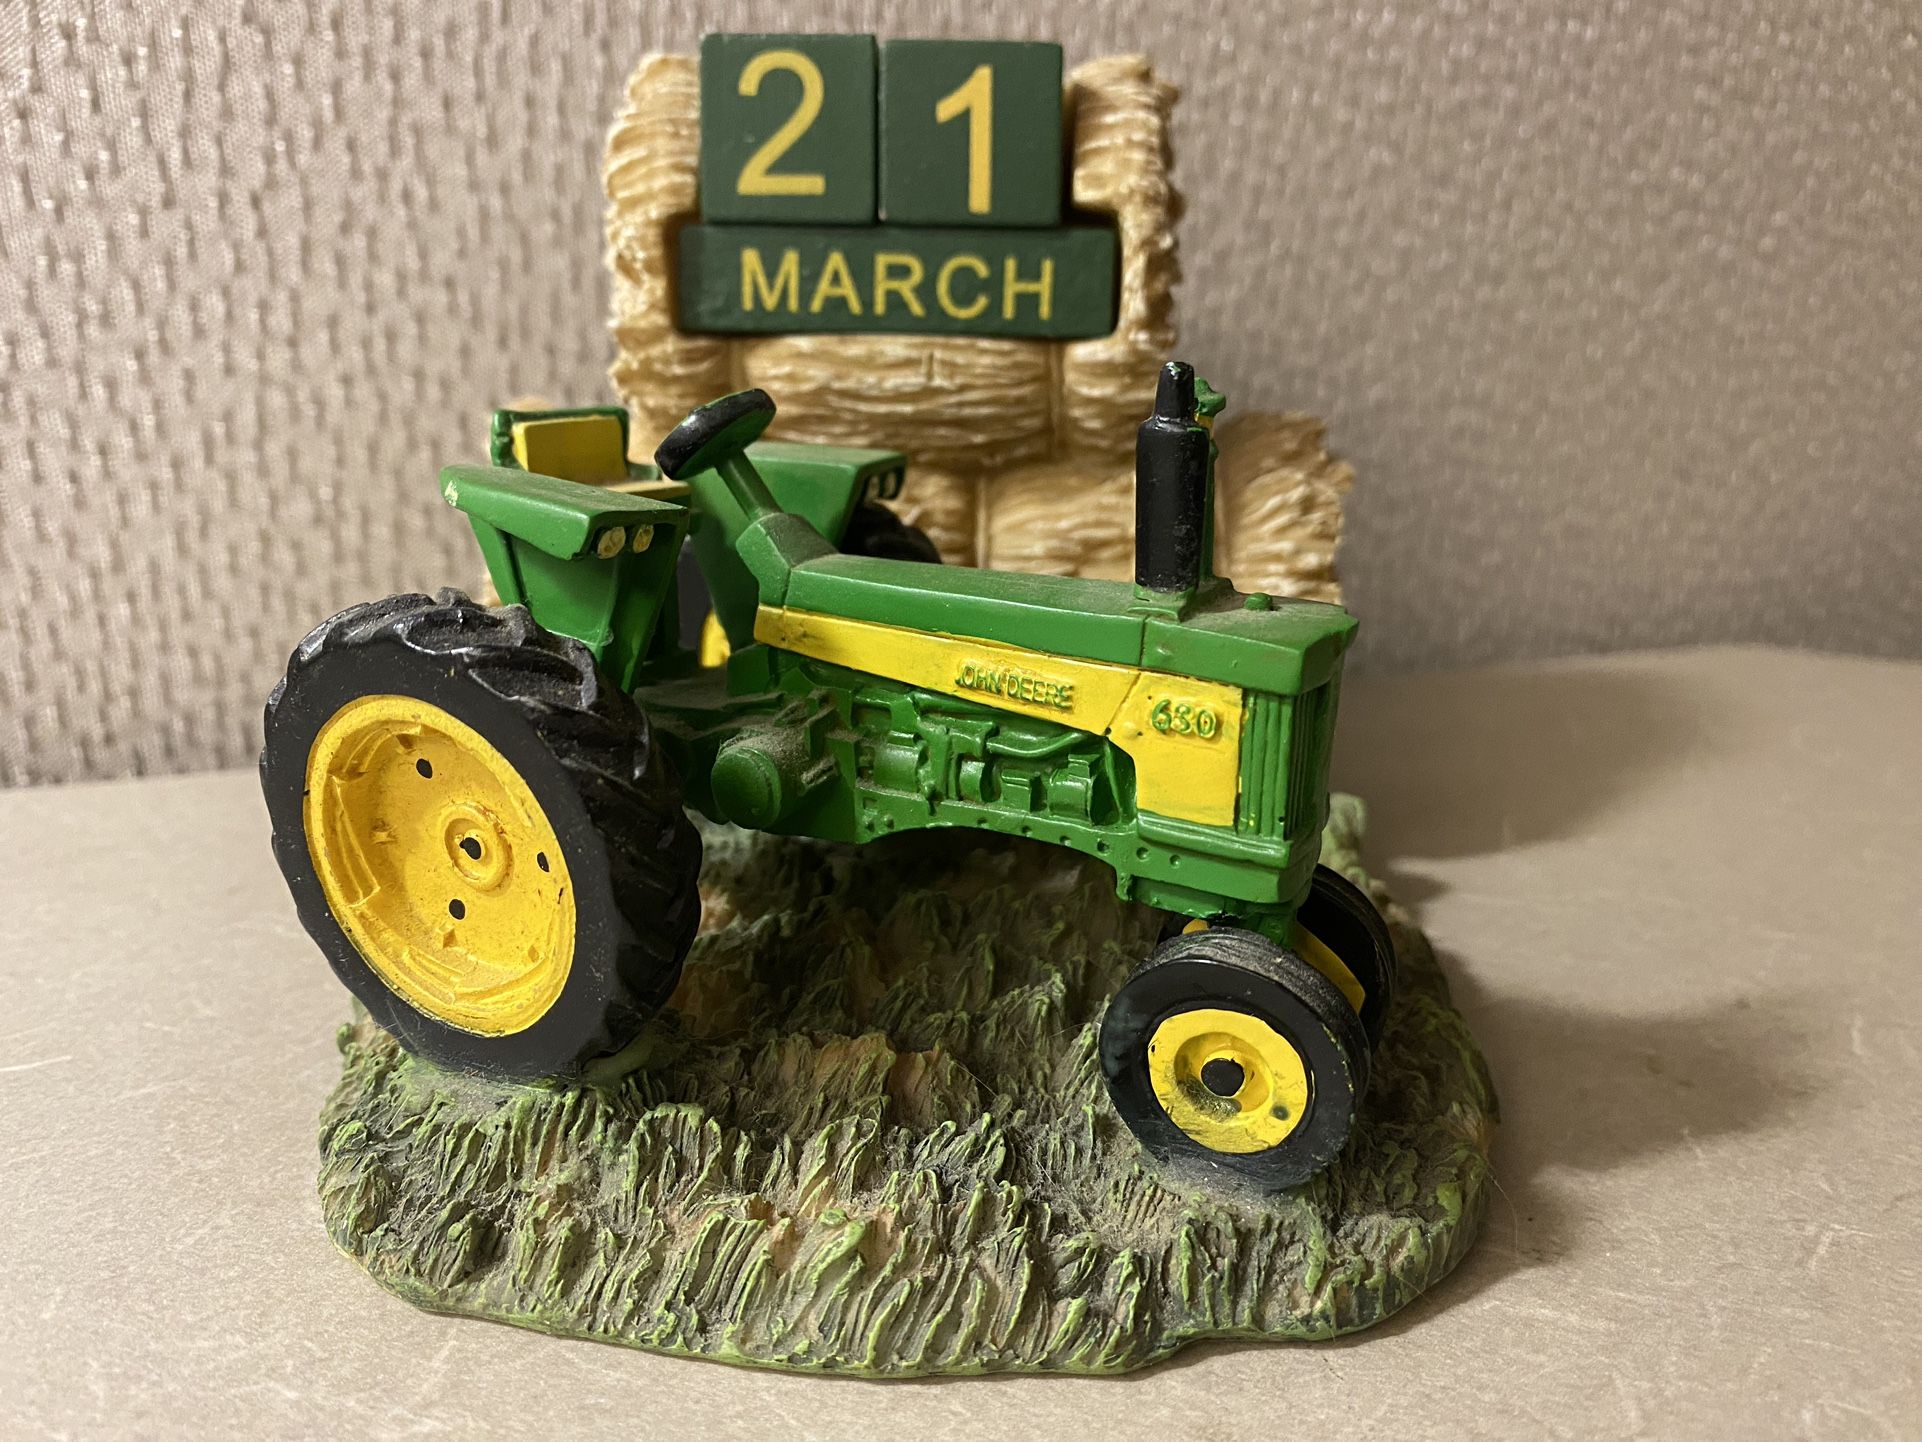 John Deere Model 630 Tractor Desk Calendar - Officially Licensed Product 